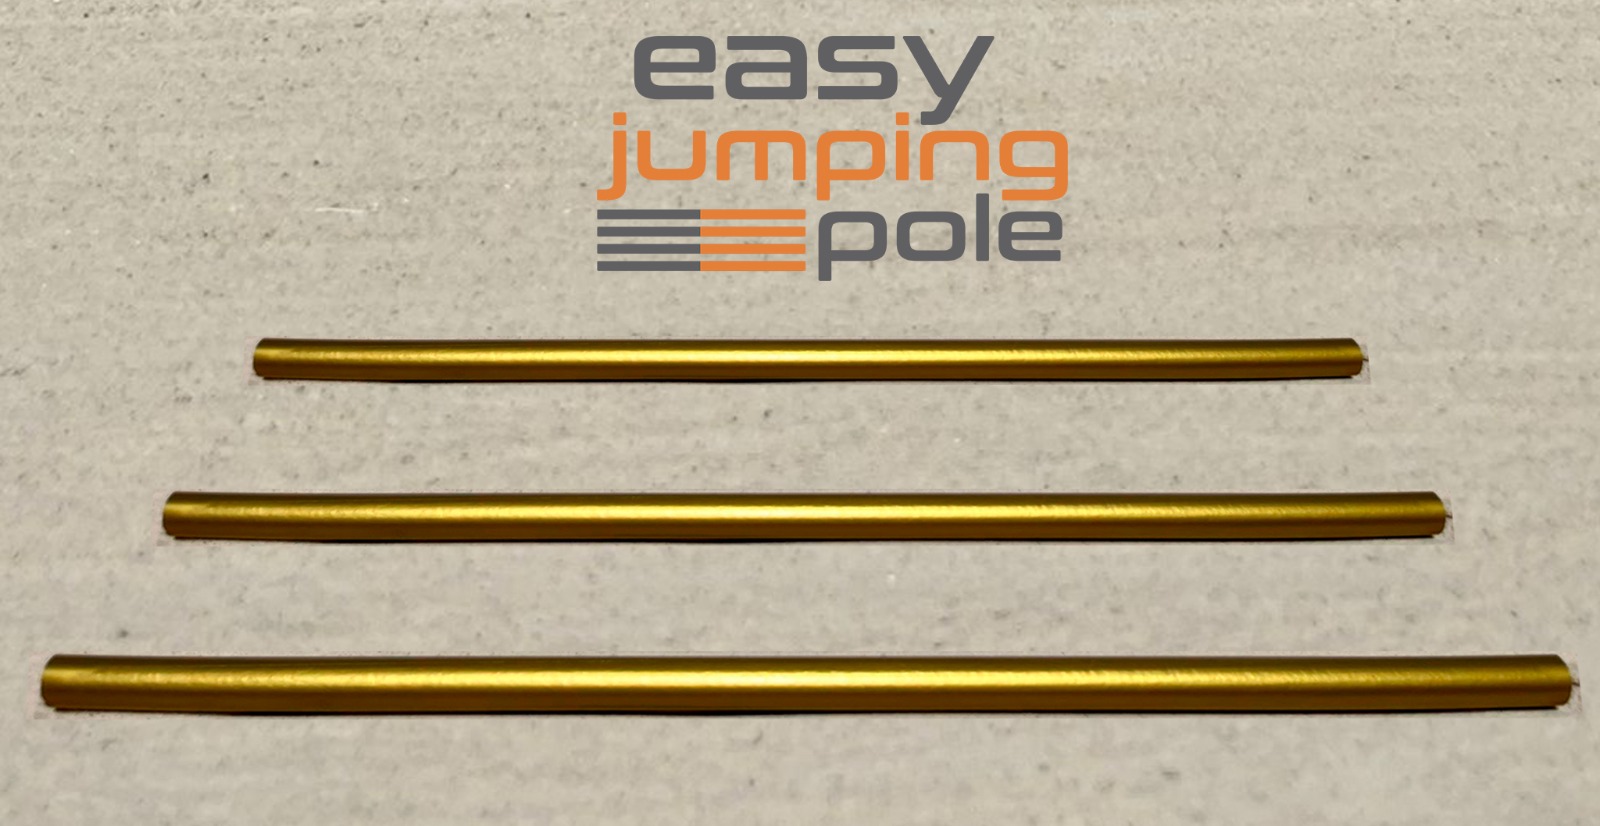 Easy jumping pole Model SC-11